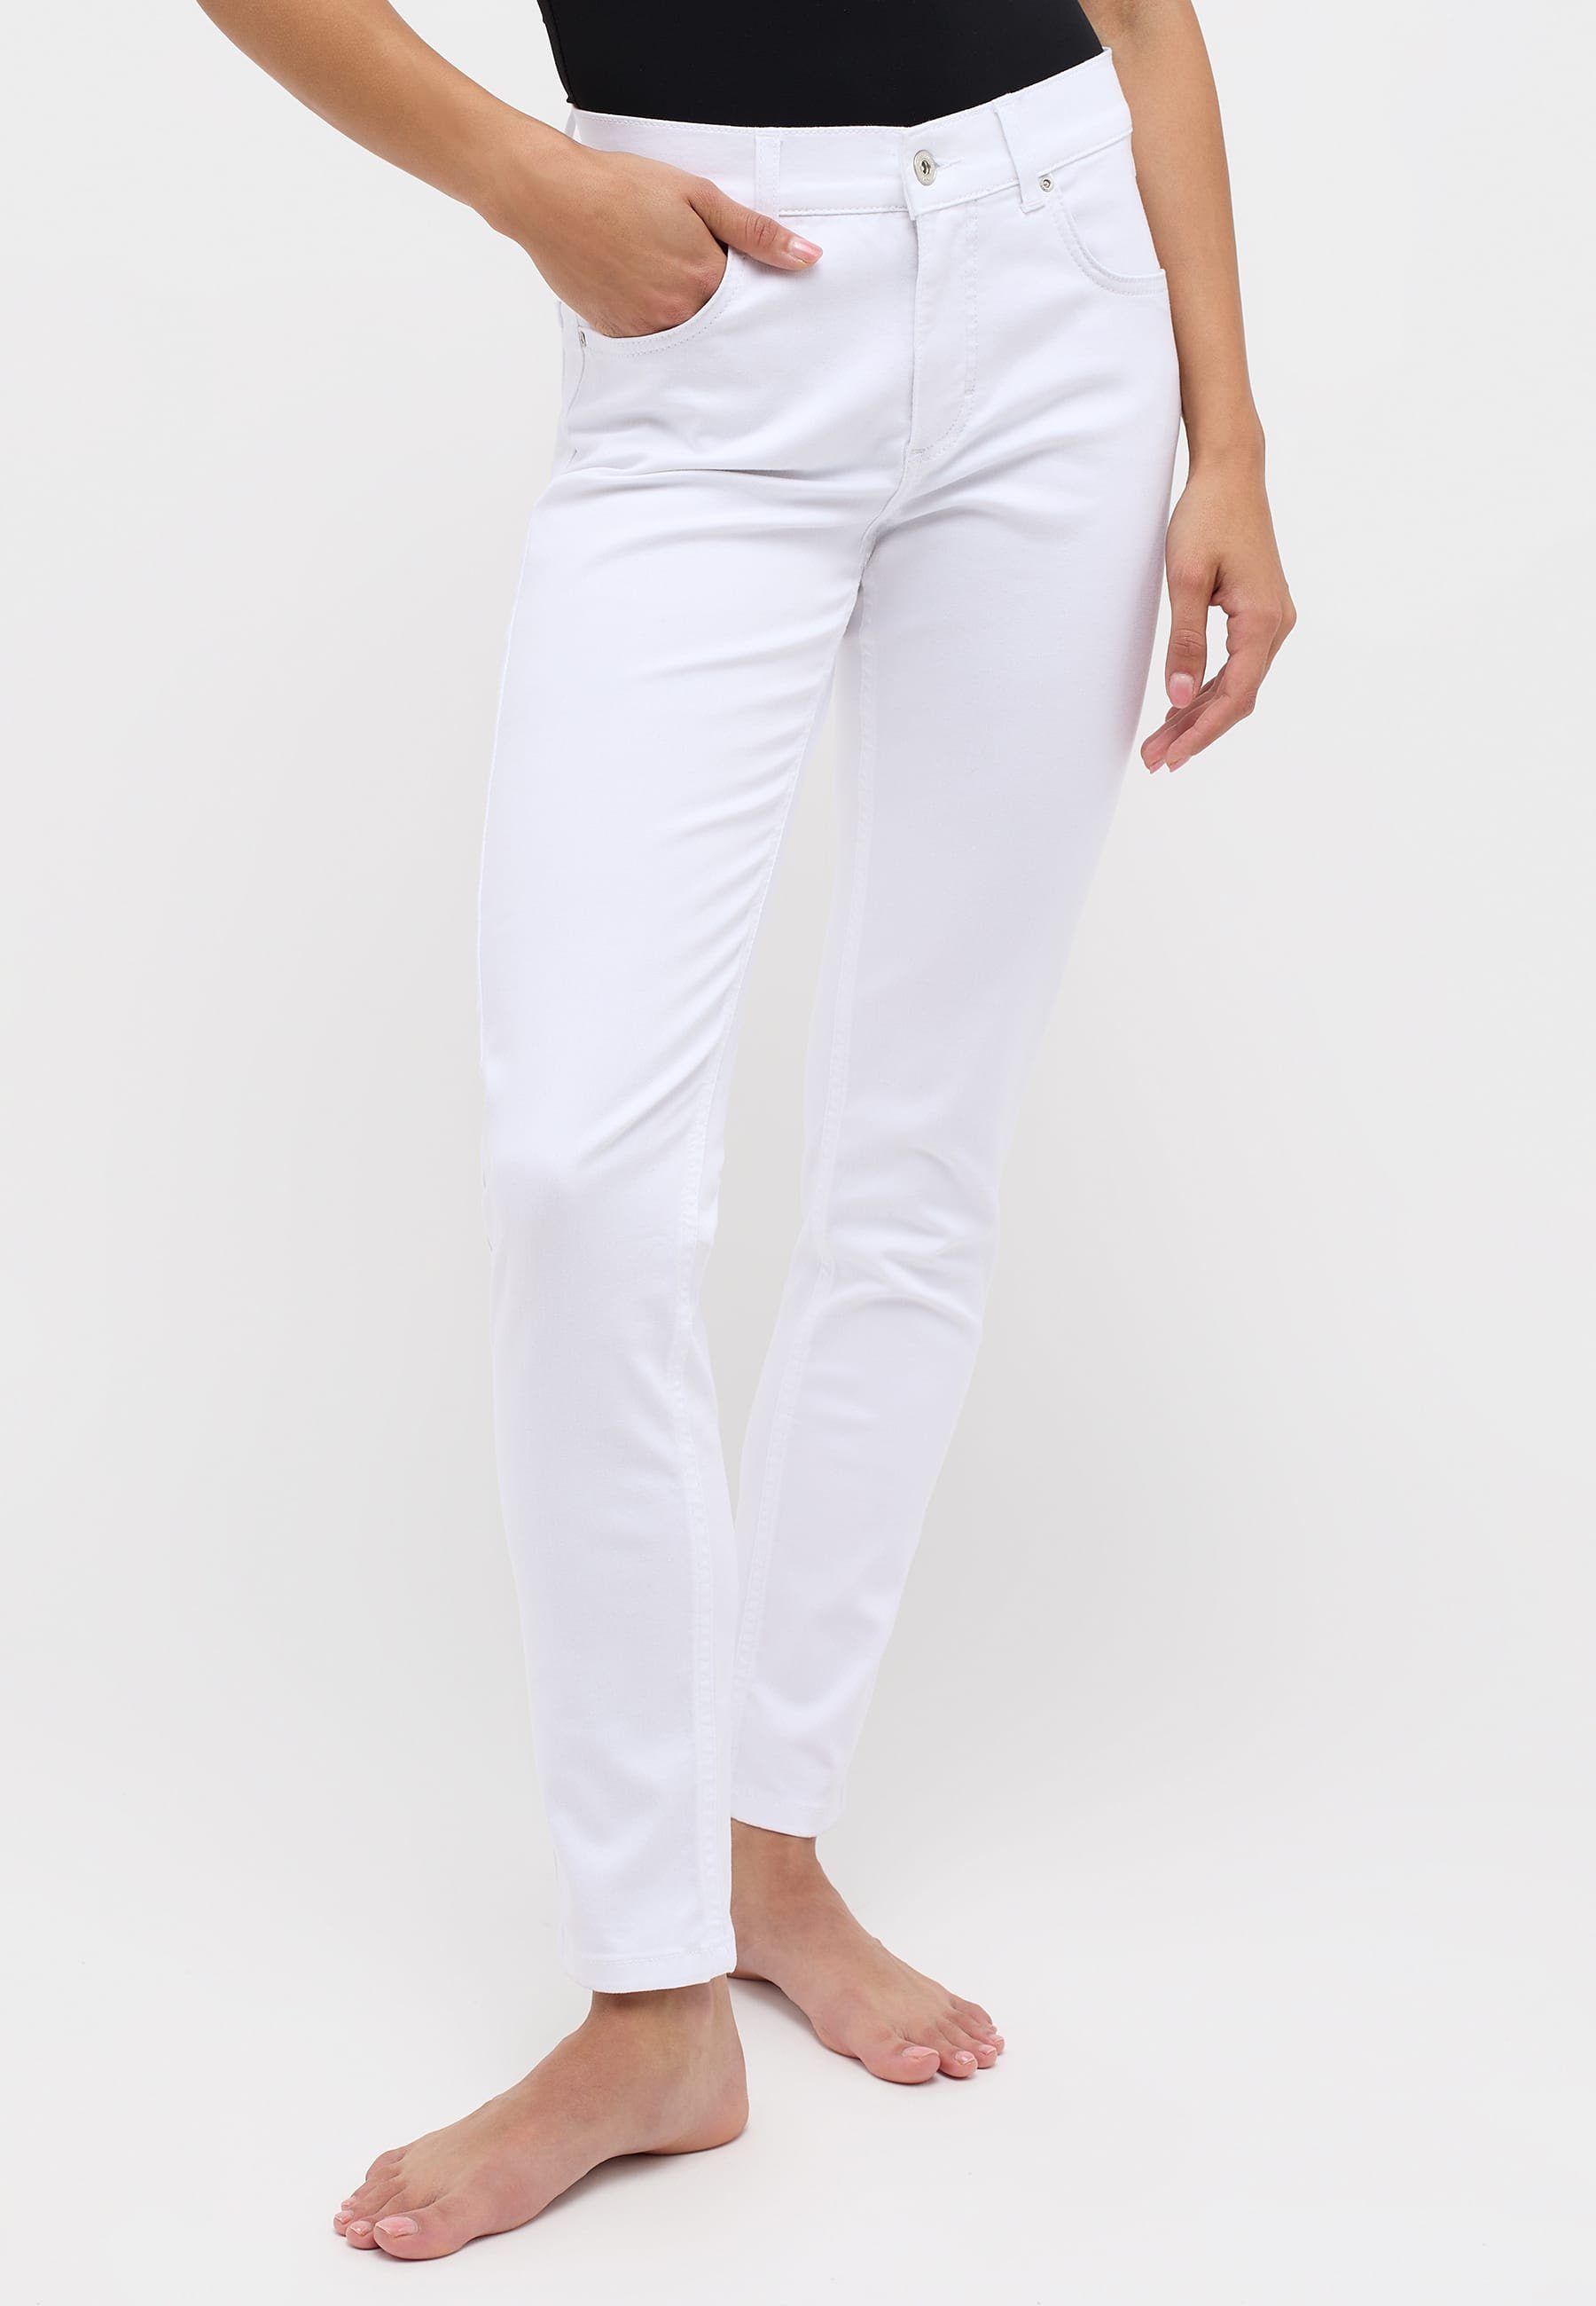 Organic Skinny Cotton ANGELS Label-Applikationen mit weiß Slim-fit-Jeans mit Jeans